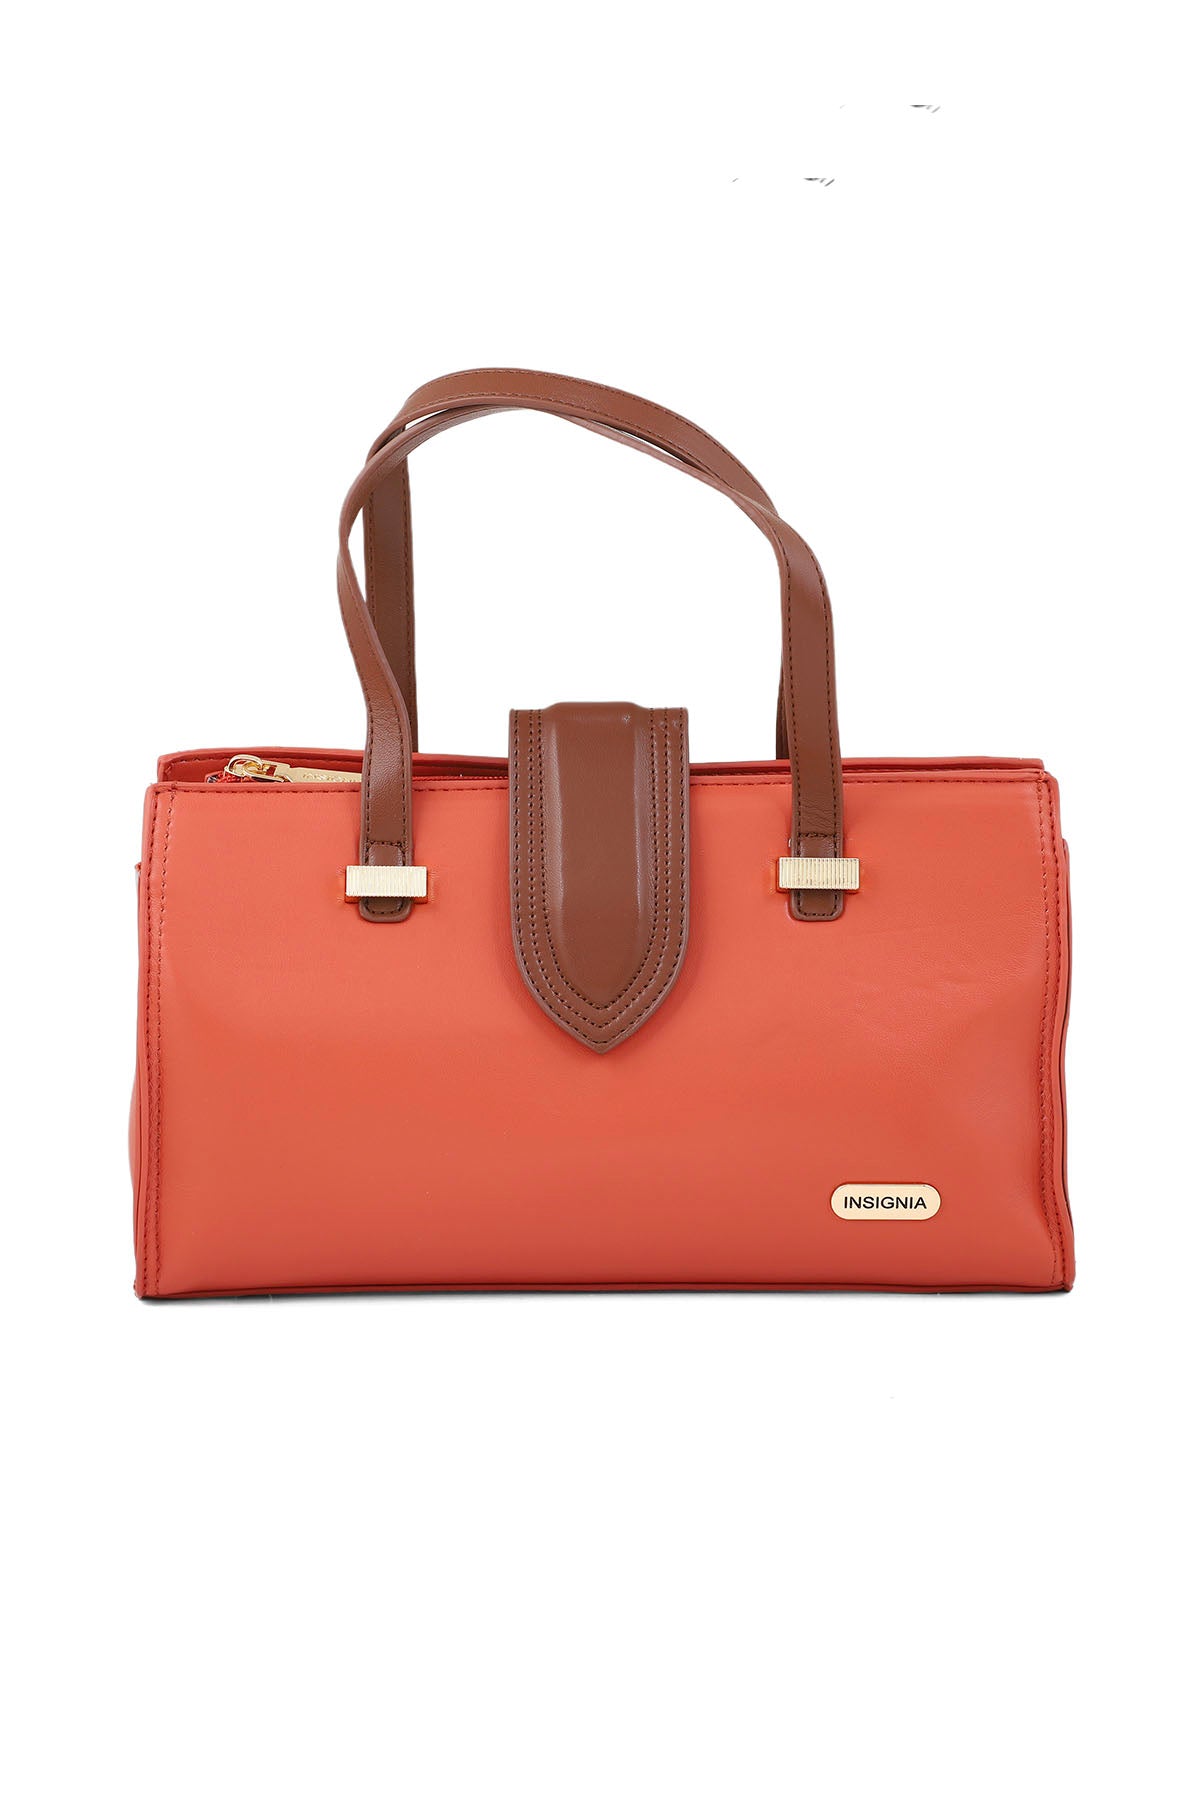 Formal Tote Hand Bags B15062-Orange